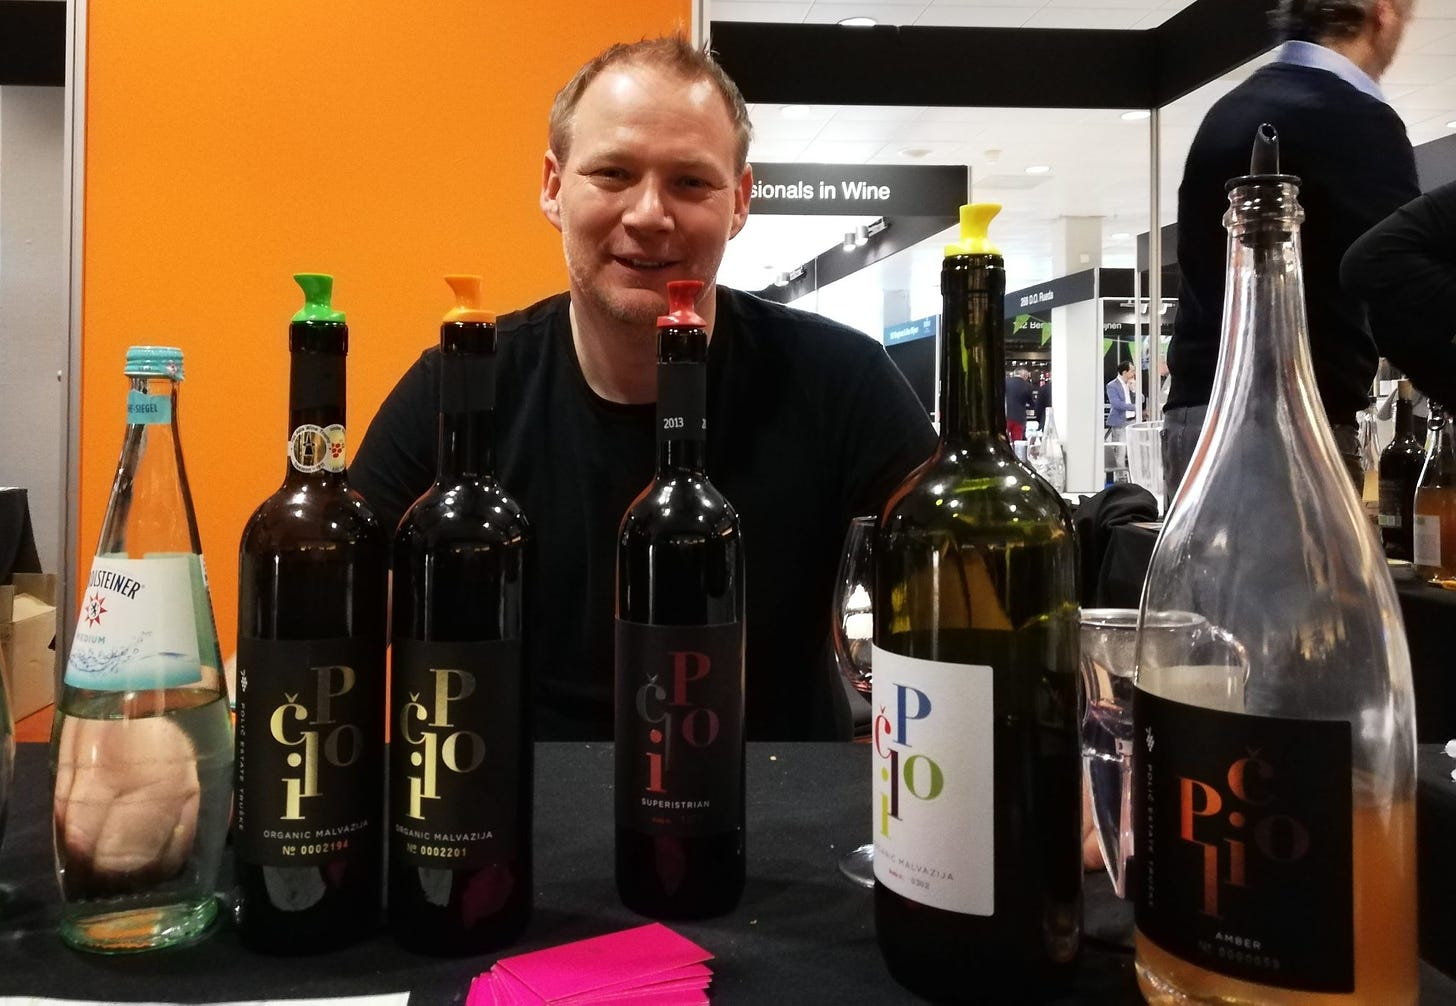 Peter Polic at Wine Professionals, Amsterdam, Jan 2020